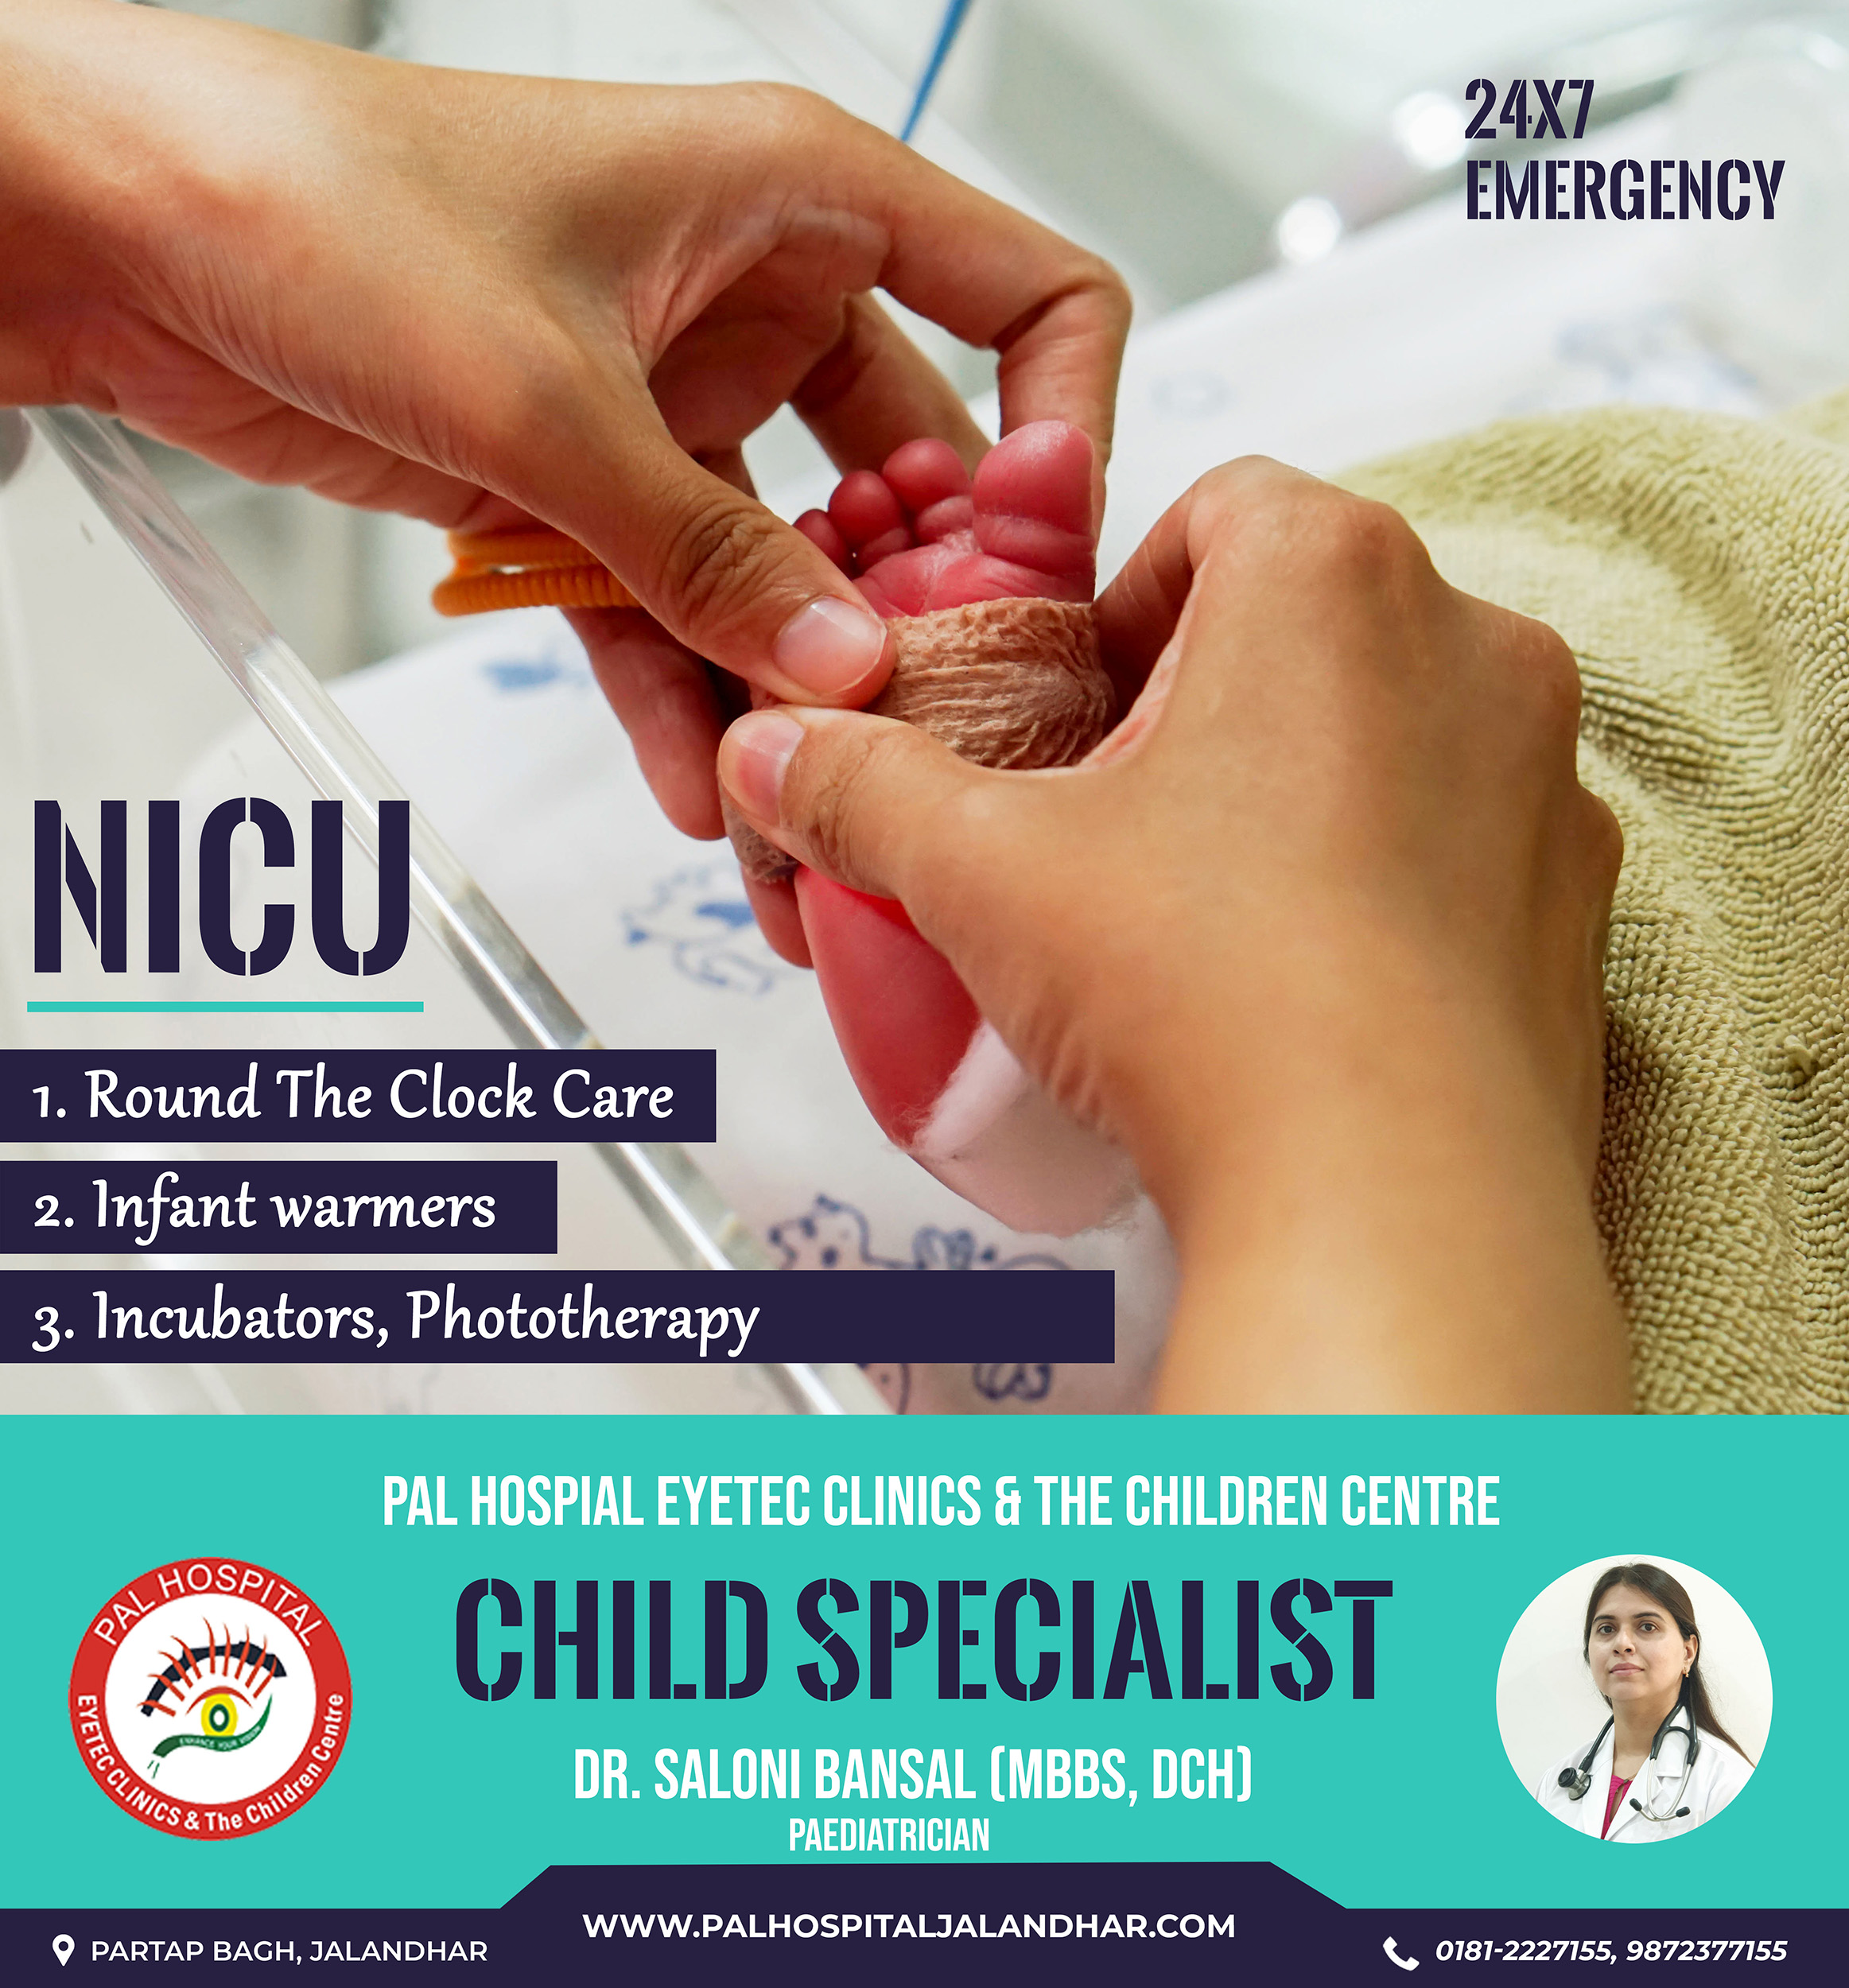 NICU in Jalandhar | Pal Hospital Eyetec Clinics & The Children Centre